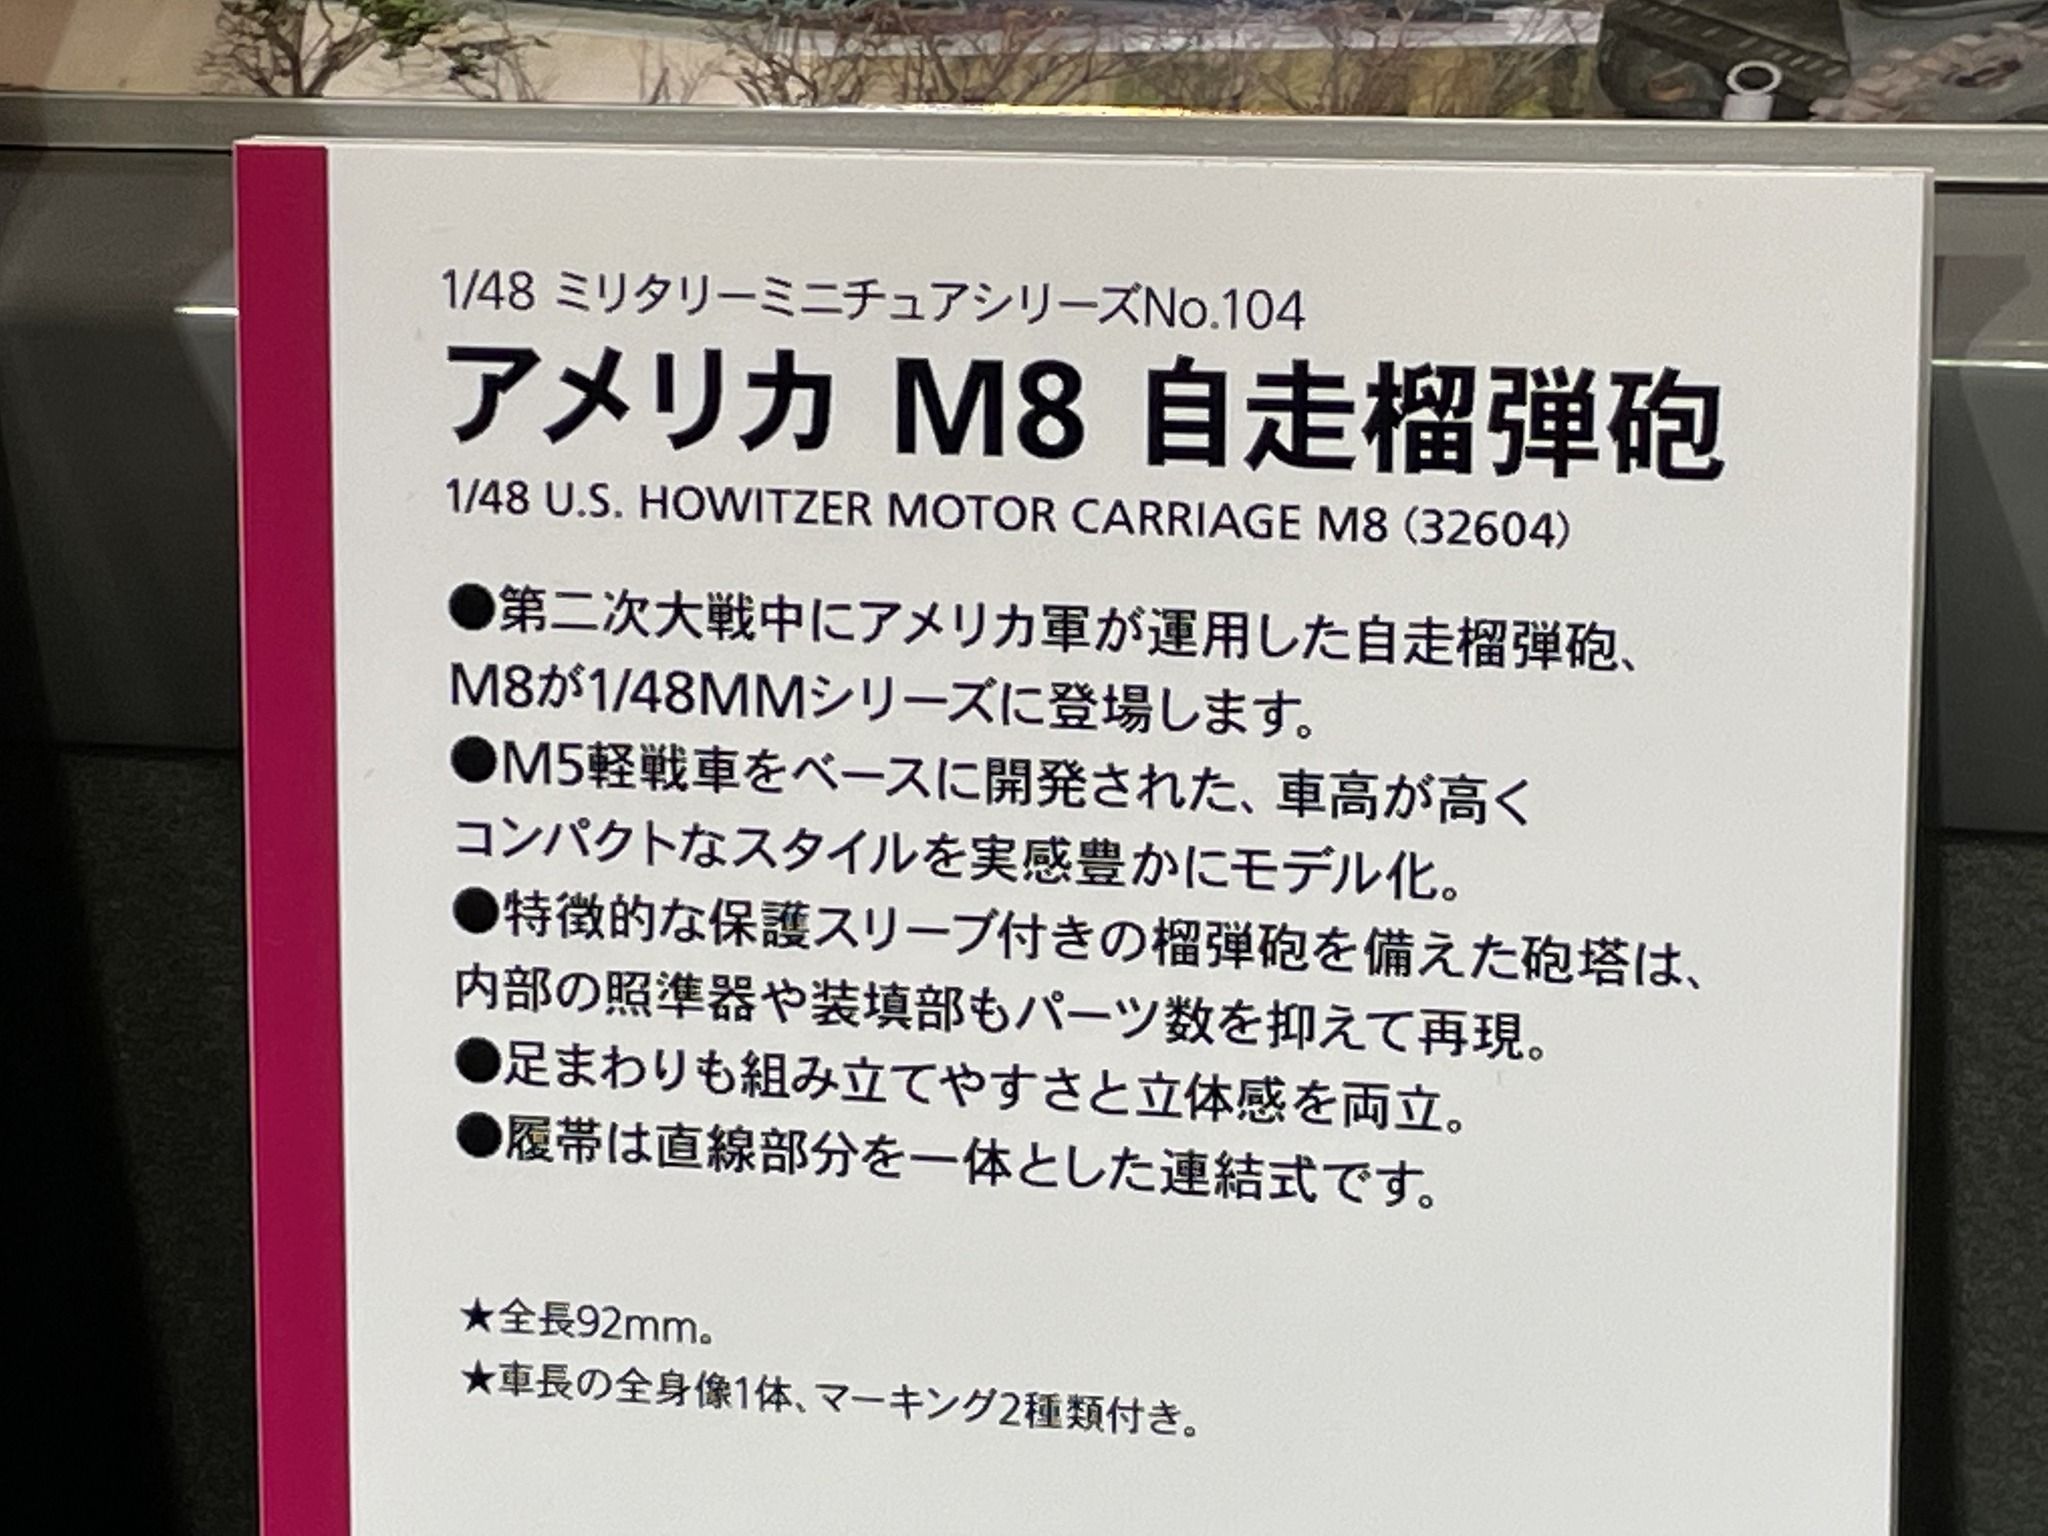 Tamiya 32604 - U.S. Howitzer Motor Carriage M8